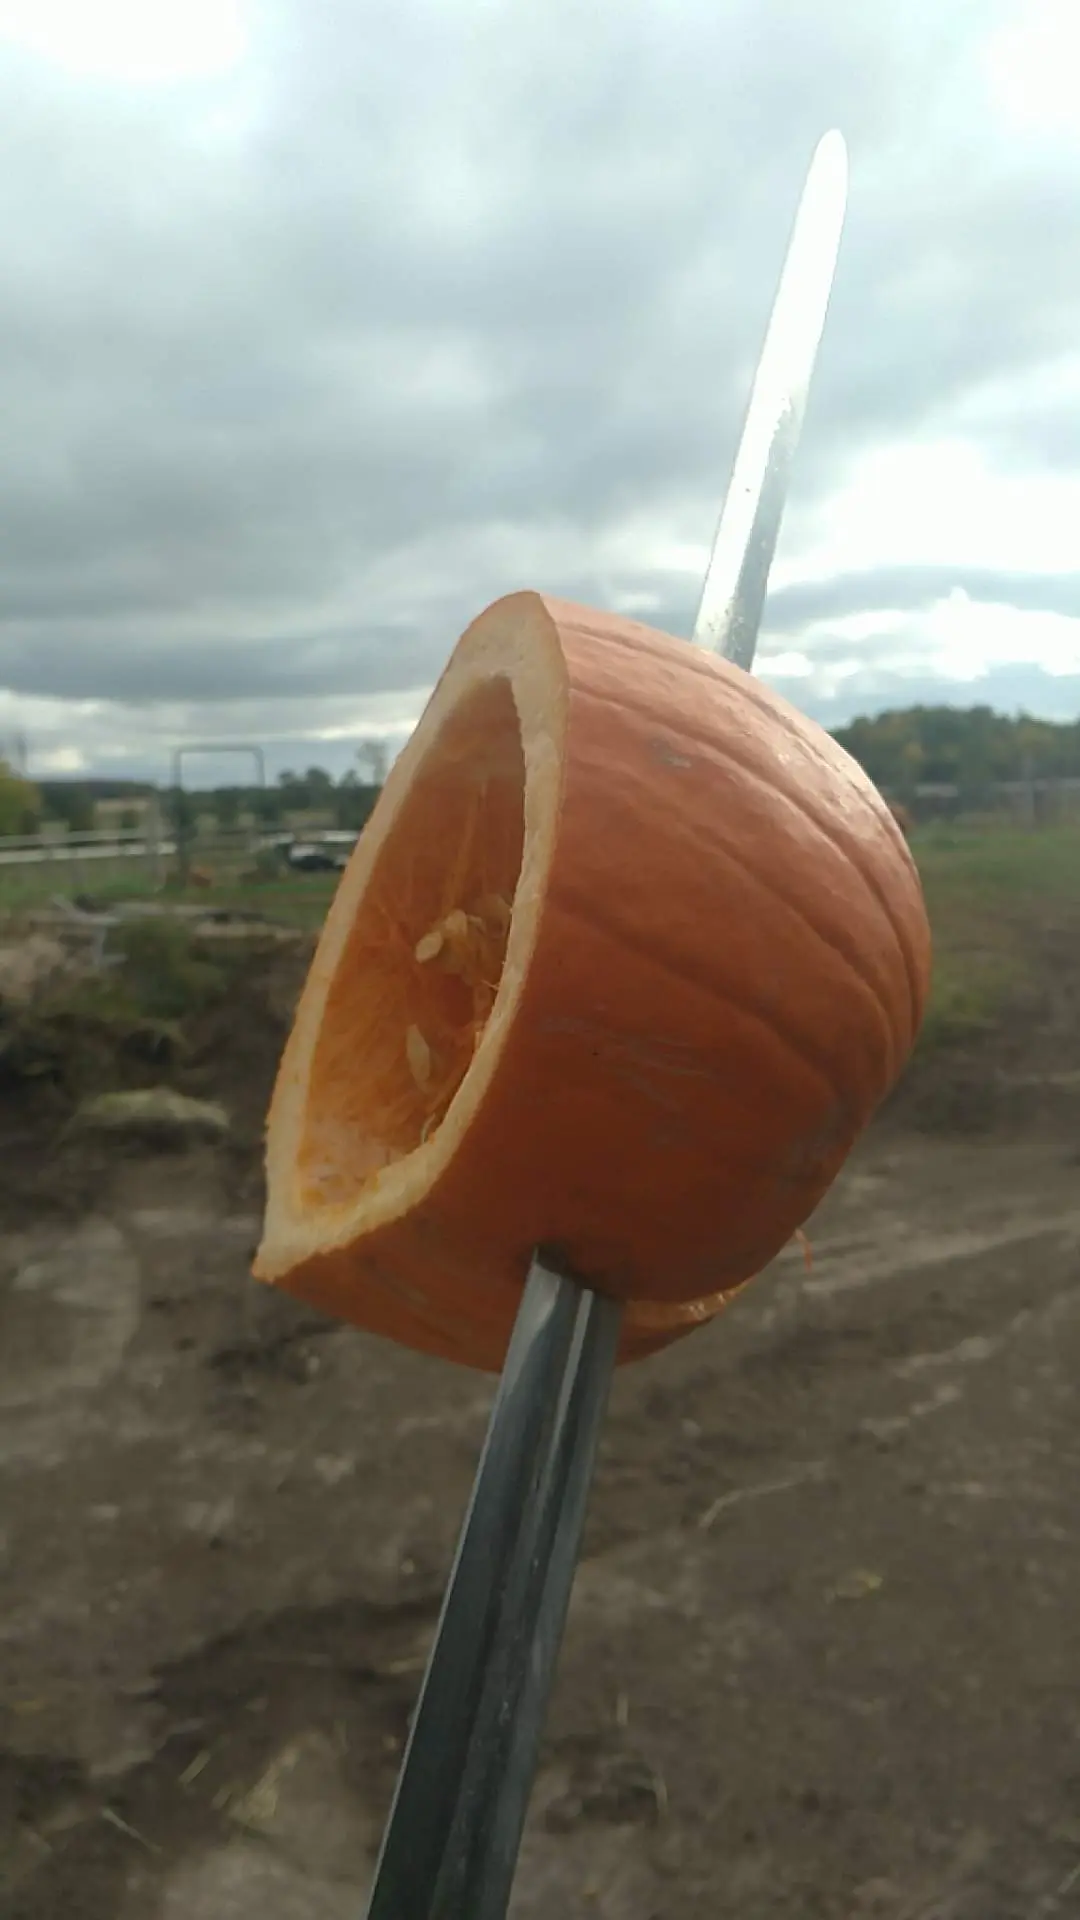 Slicing a pumpkin with a sword